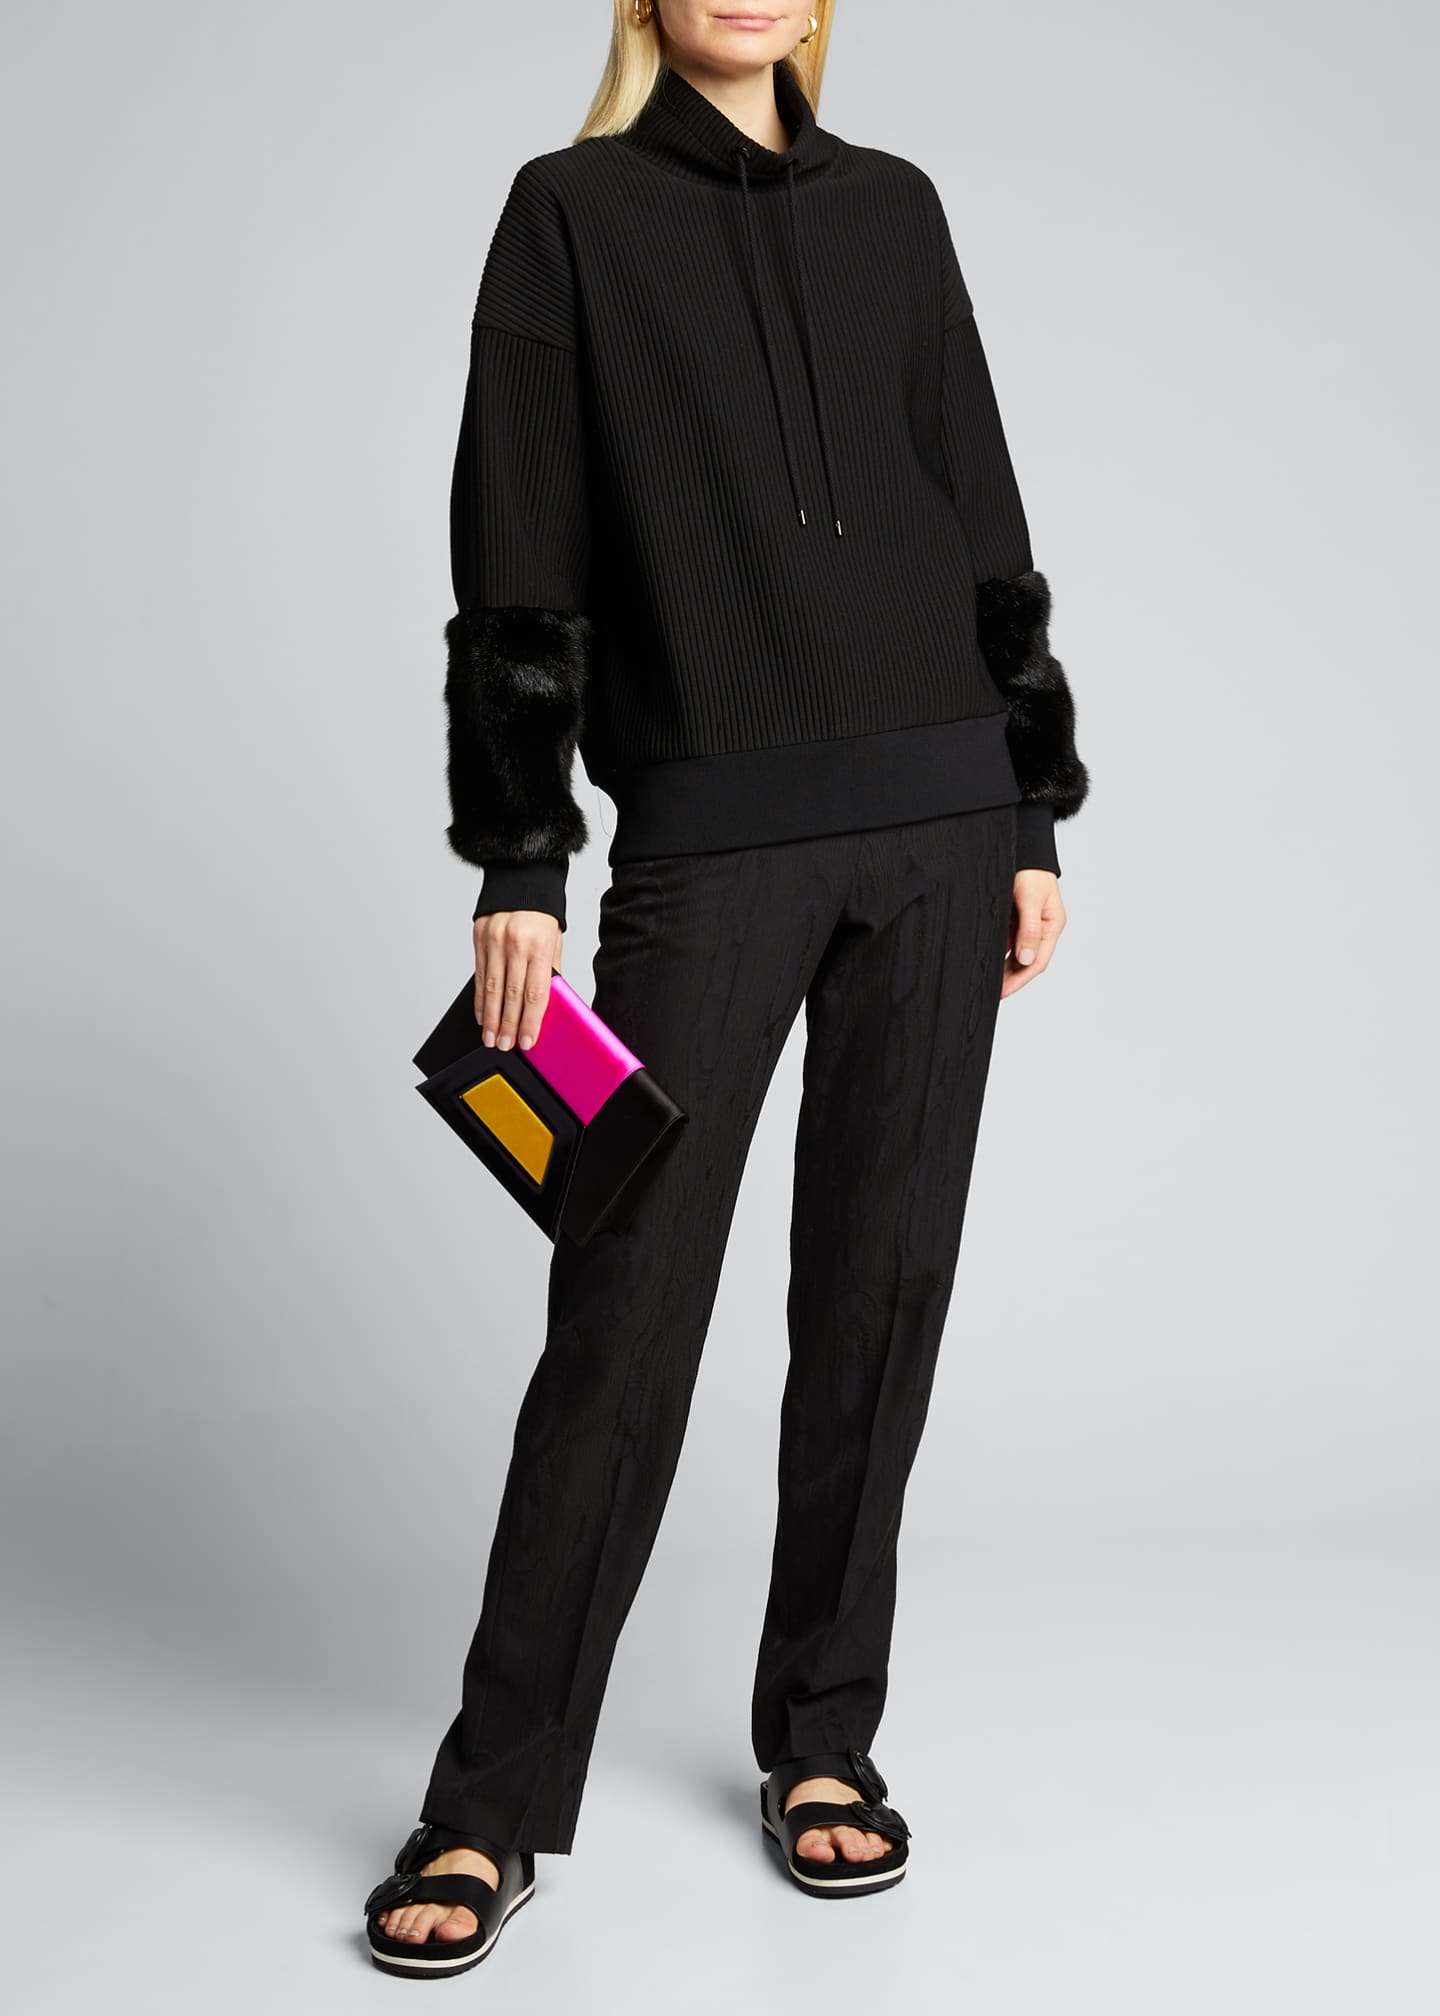 PELLEGRINO Paola Colorblock Leather & Satin Clutch Bag - Bergdorf Goodman